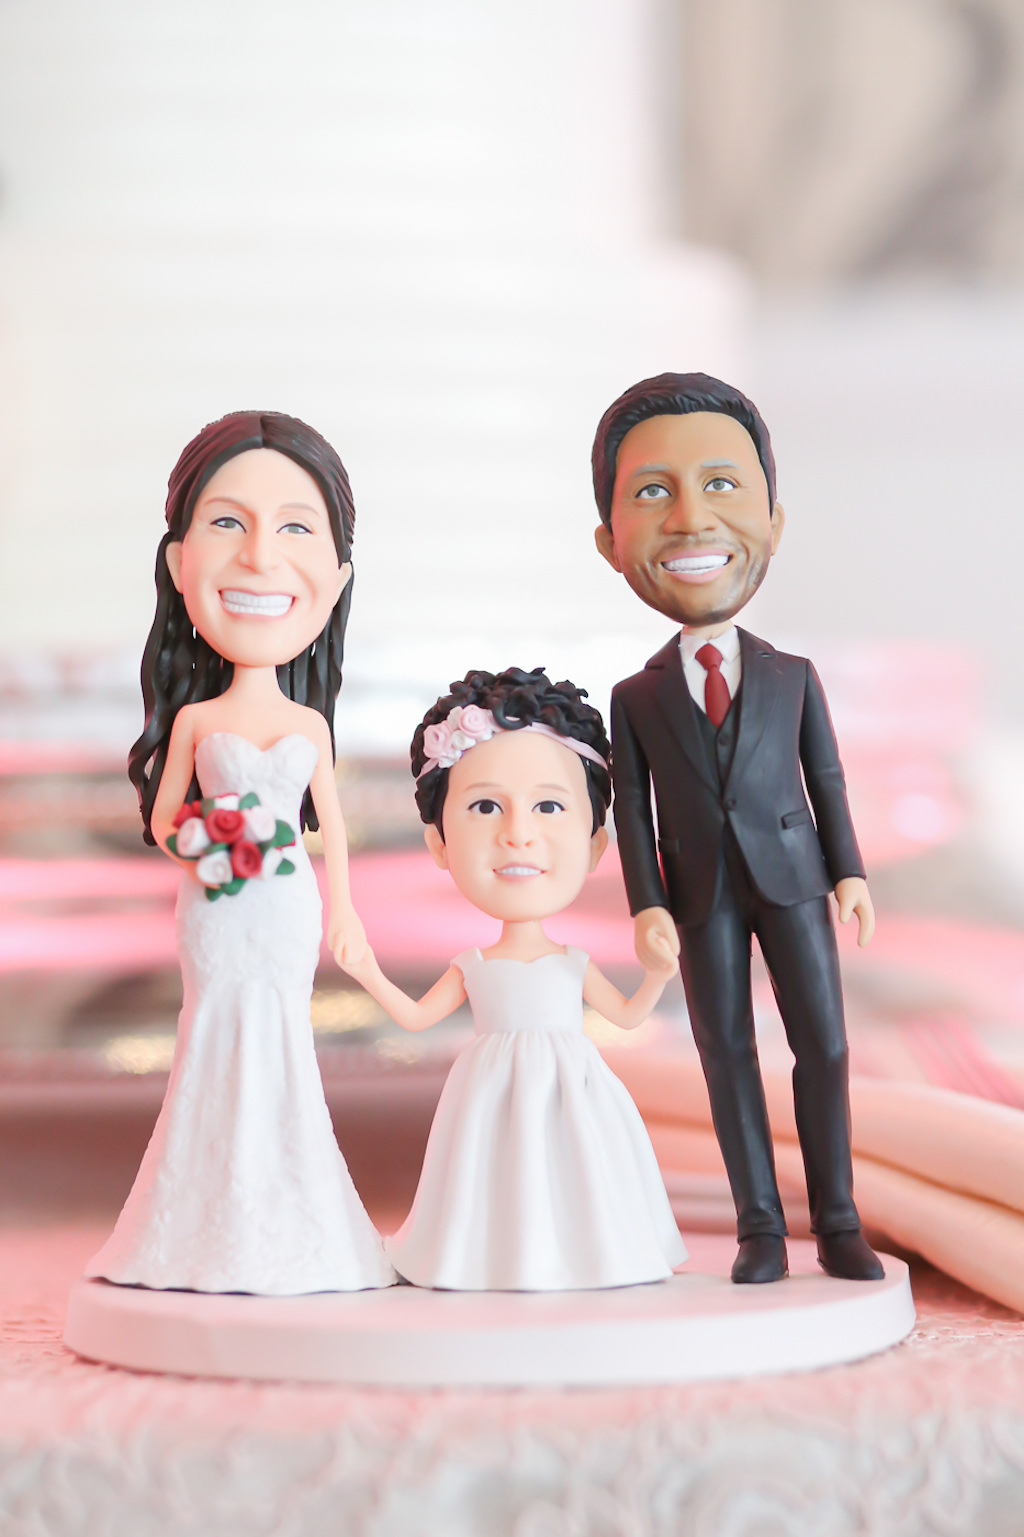 Custom Bride, Groom and Daughter Figurine Cake Topper | Wedding Photographer Lifelong Photography Studios